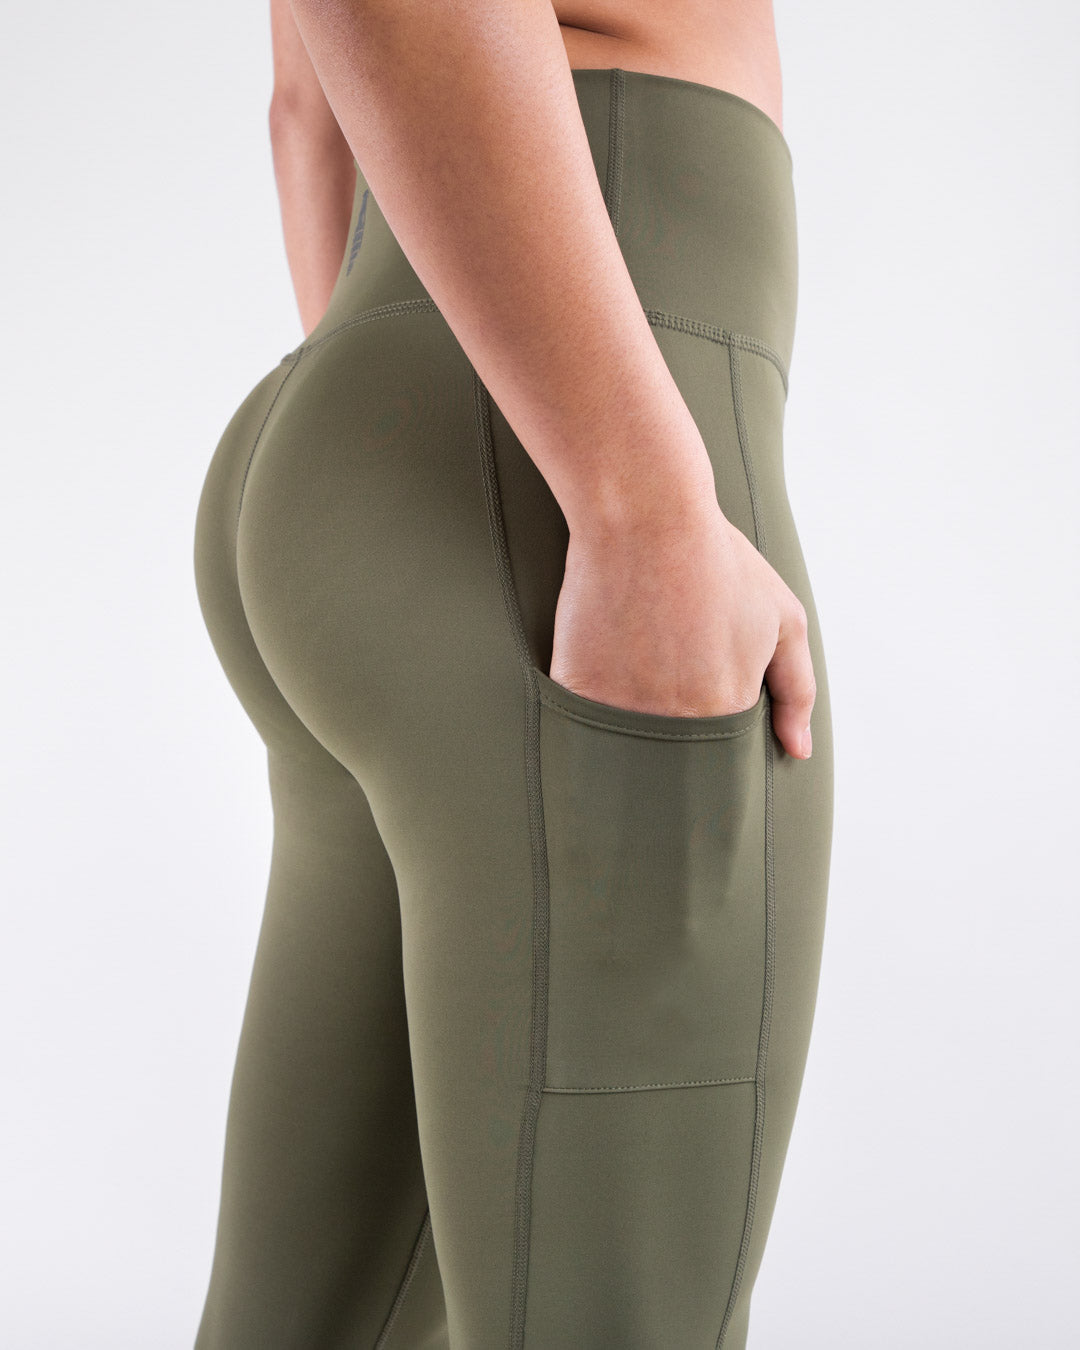 Grenade Womens Leggings Army Green Pockets